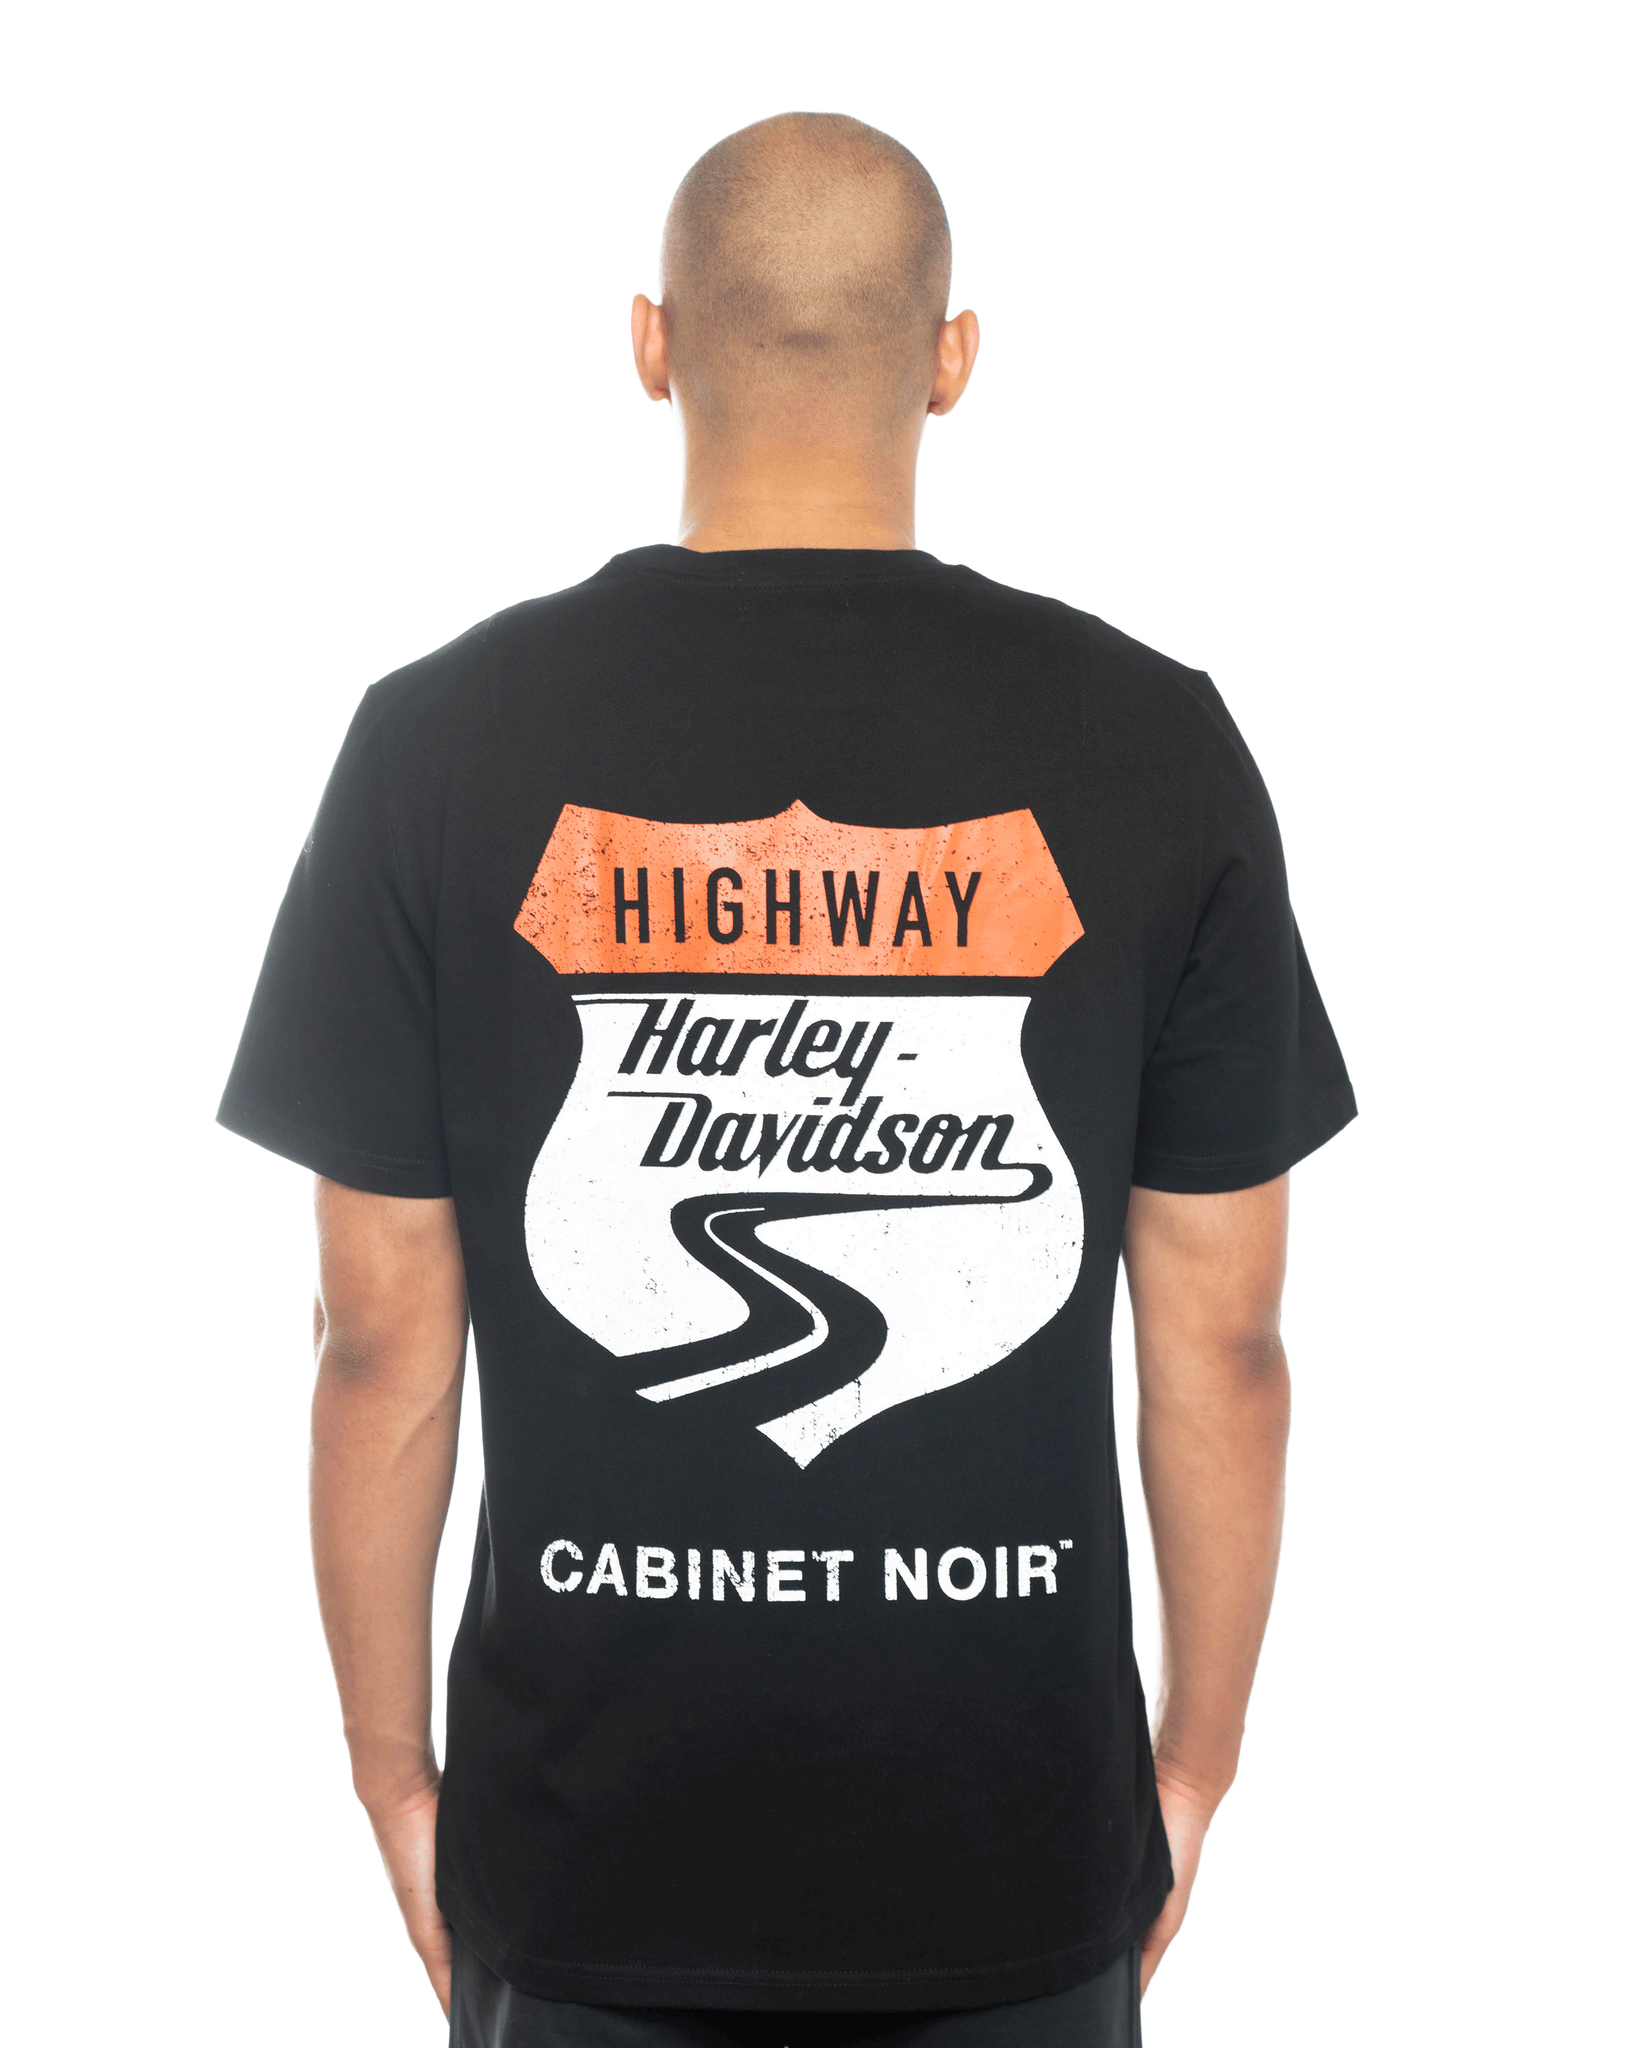 Cabinet Noir x Highway Harley Eagle Tee Black